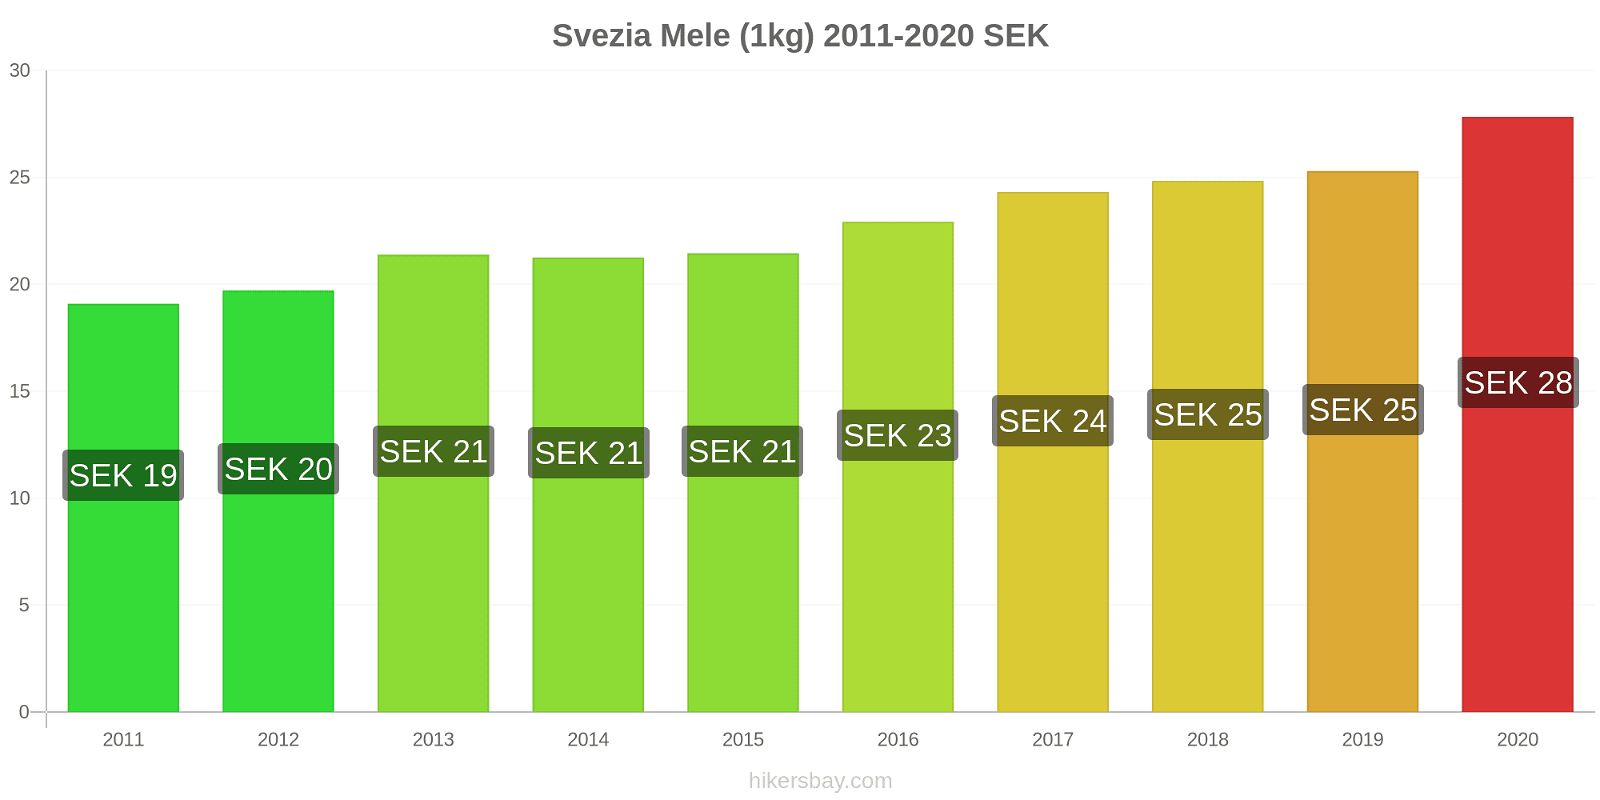 Svezia variazioni di prezzo Mele (1kg) hikersbay.com